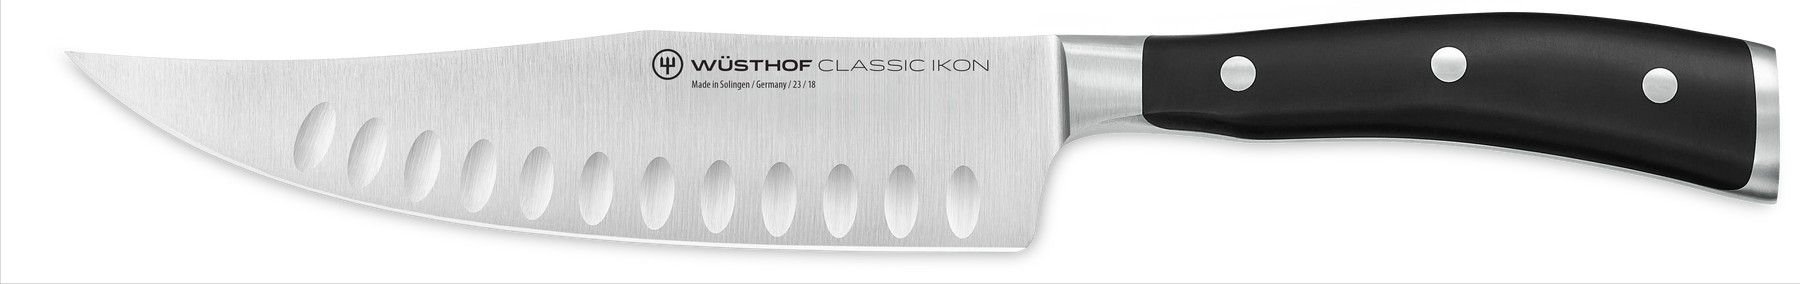 Wusthof Classic Ikon Craftsman 7" Hollow Edge